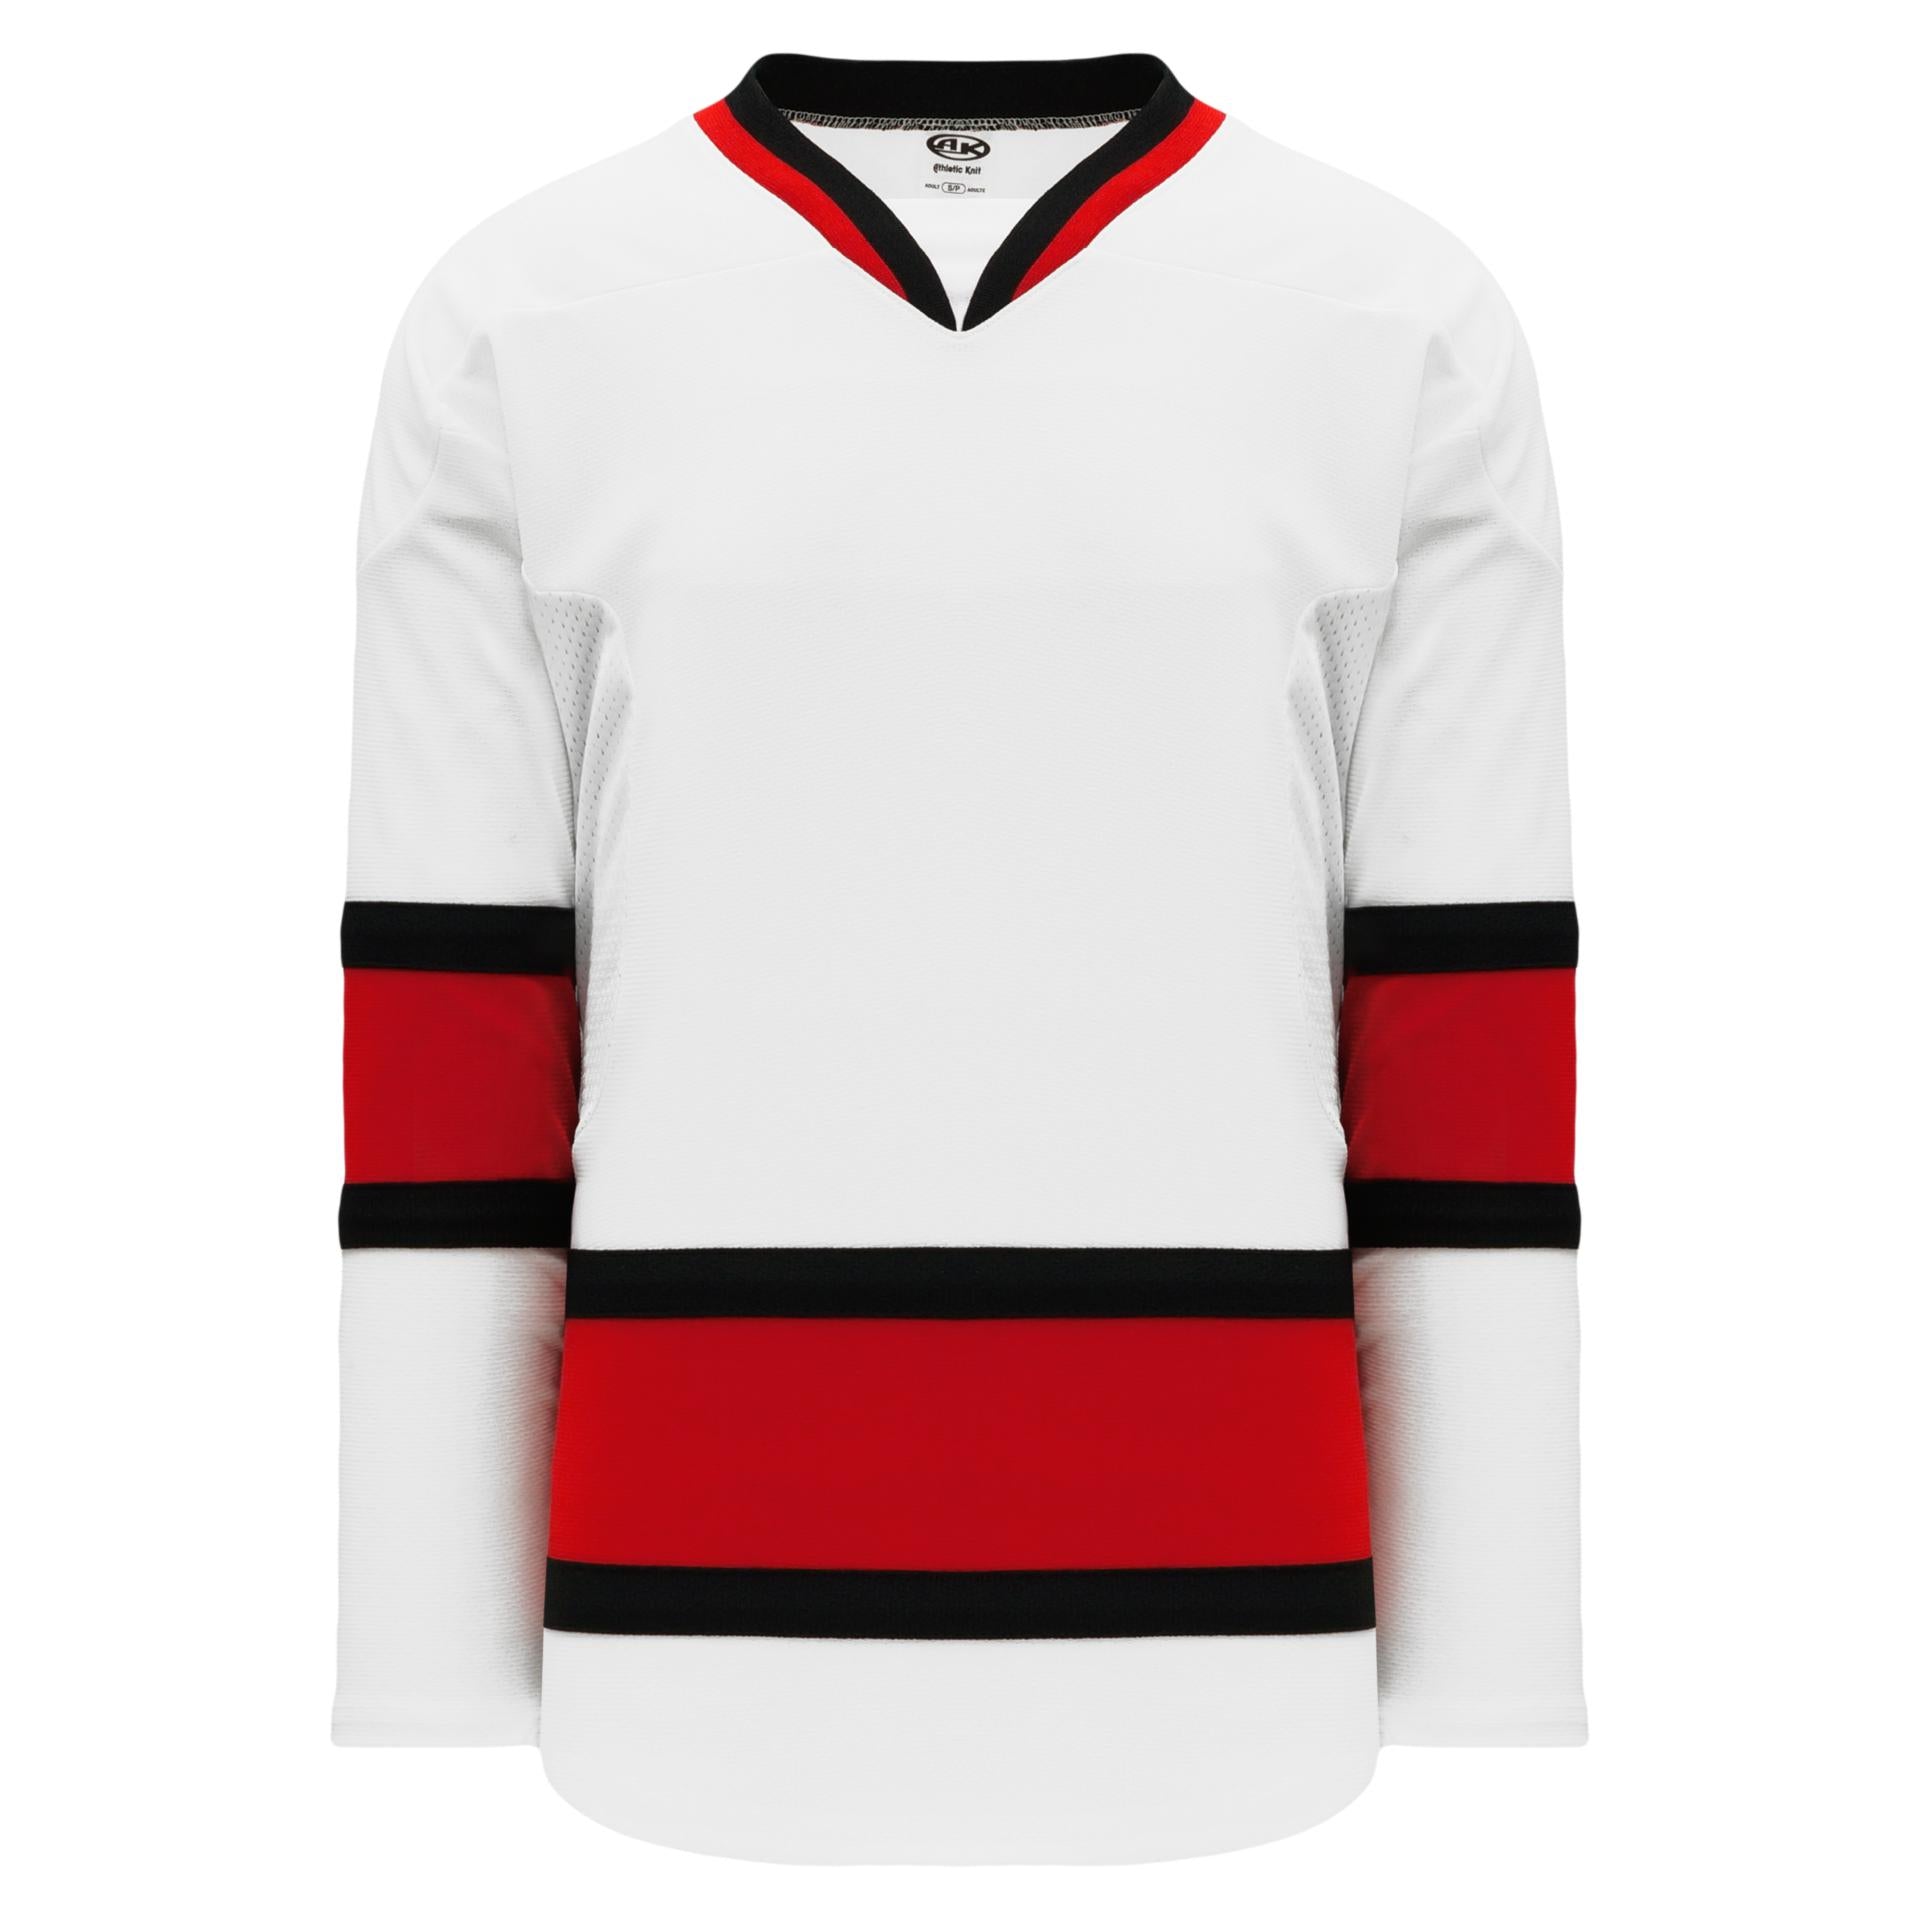 Collection of Team Canada jerseys : r/hockeyjerseys